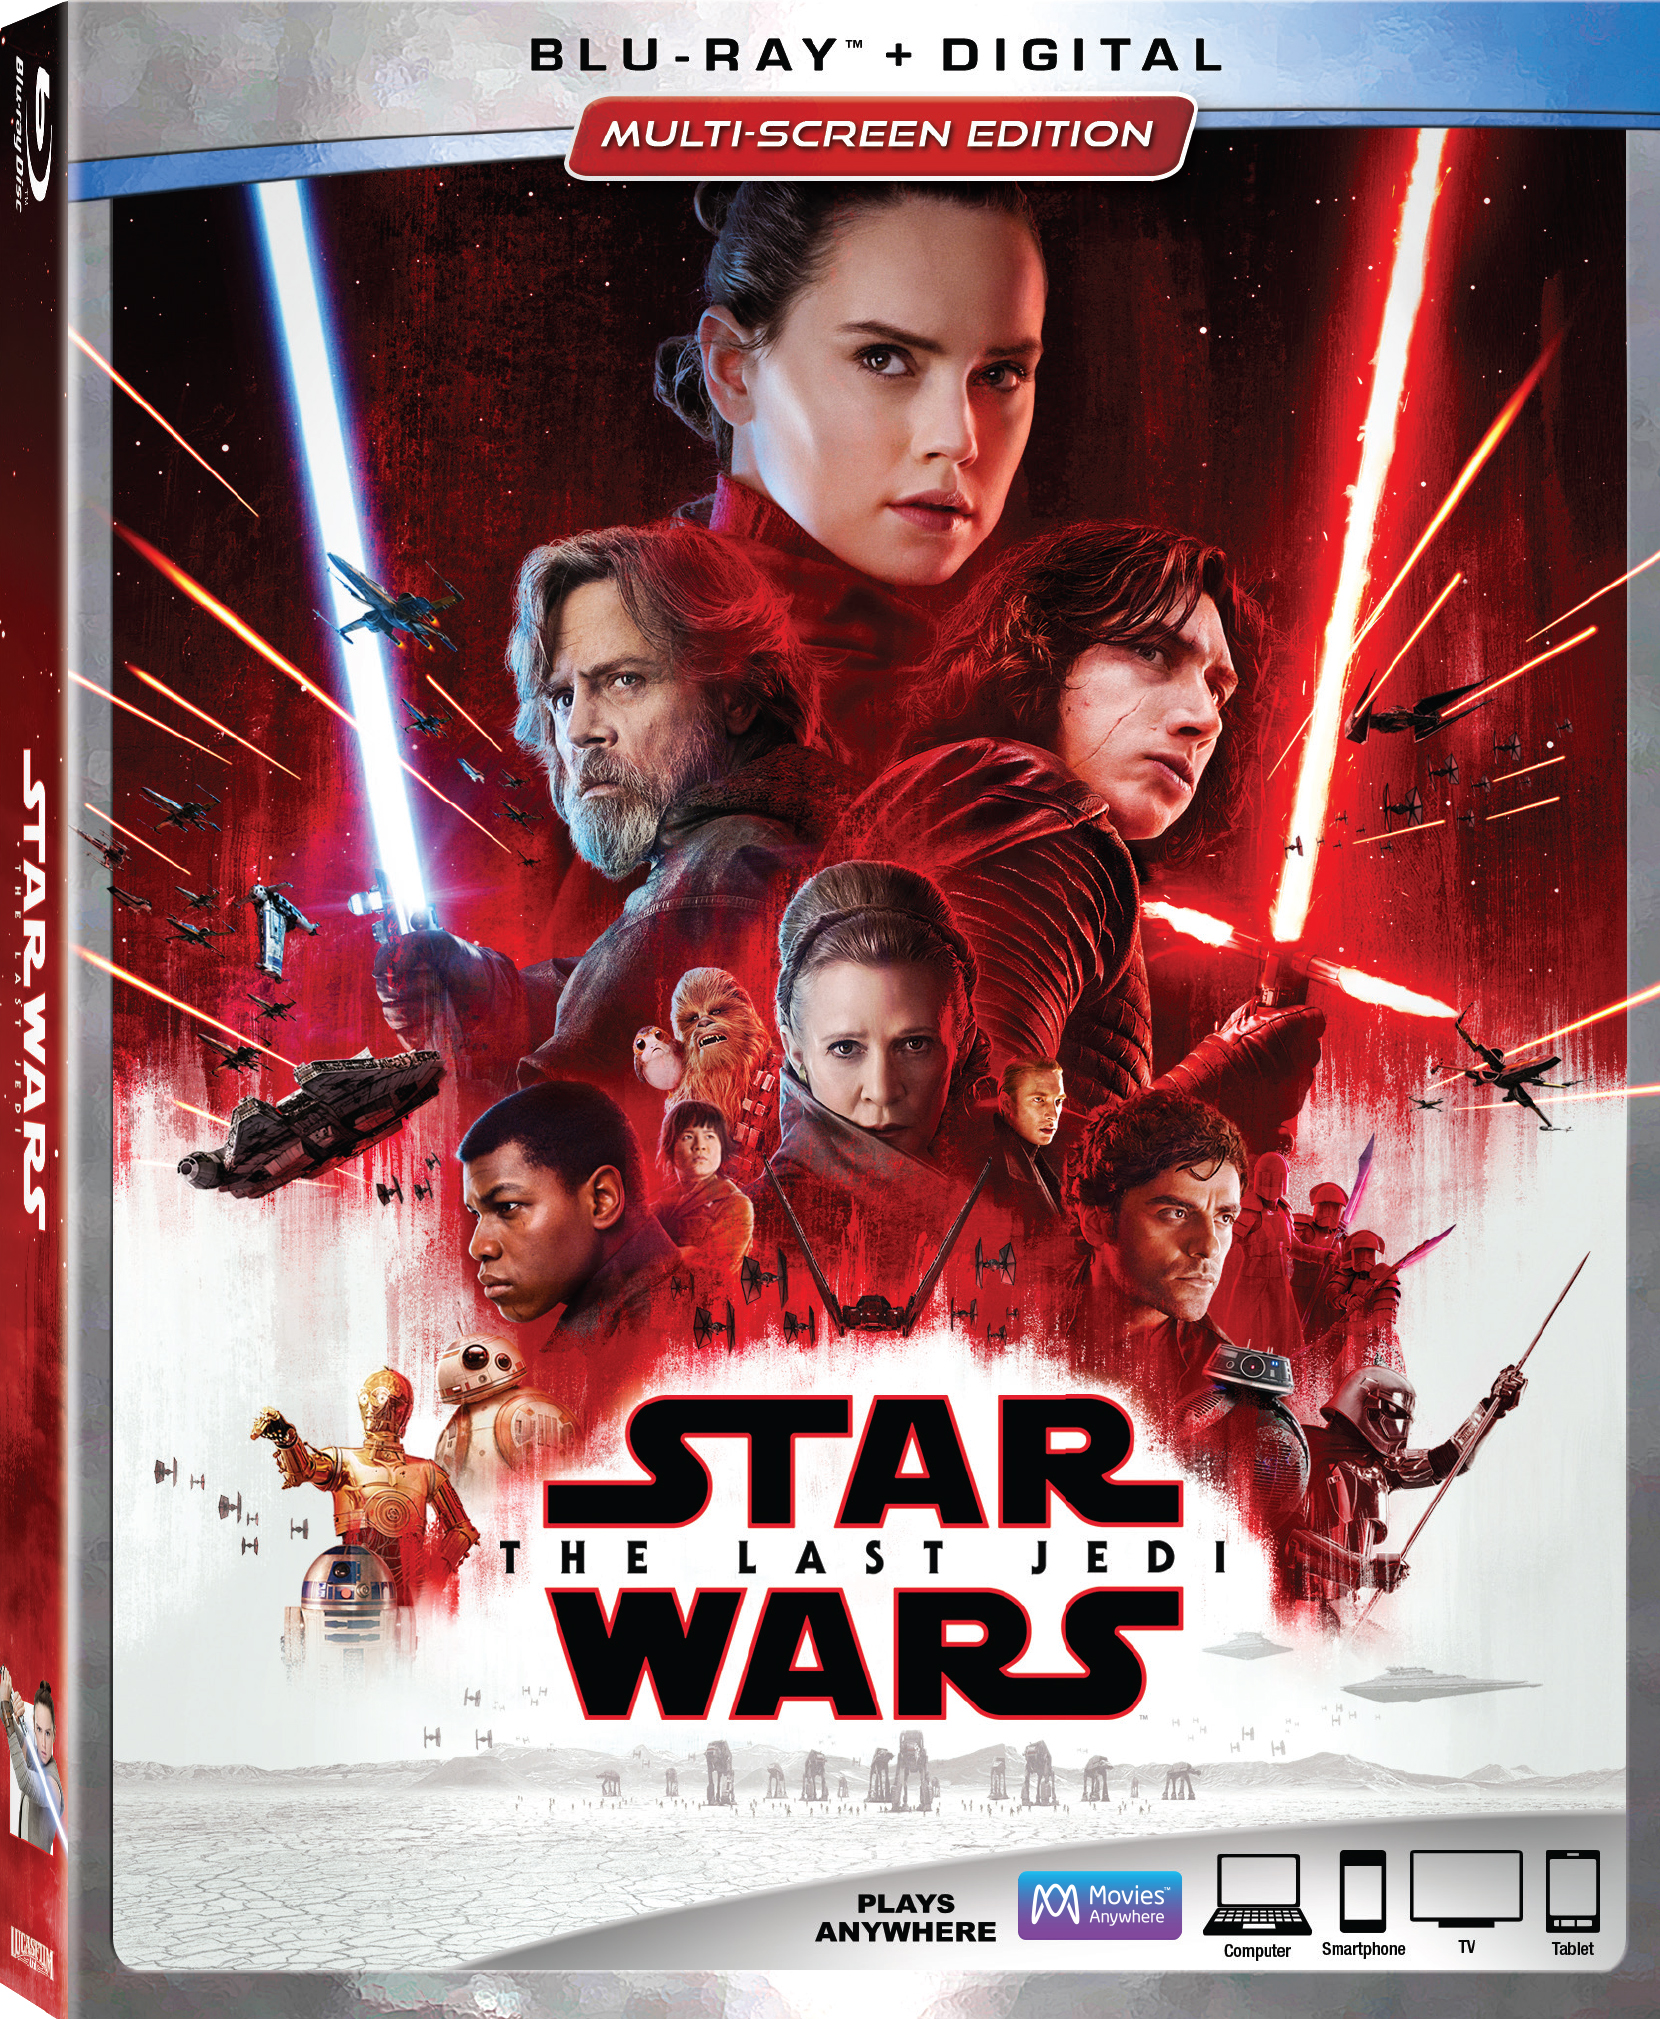 Star Wars: The Last Jedi Blu-Ray Combo cover (Walt Disney Studios Home Entertainment)